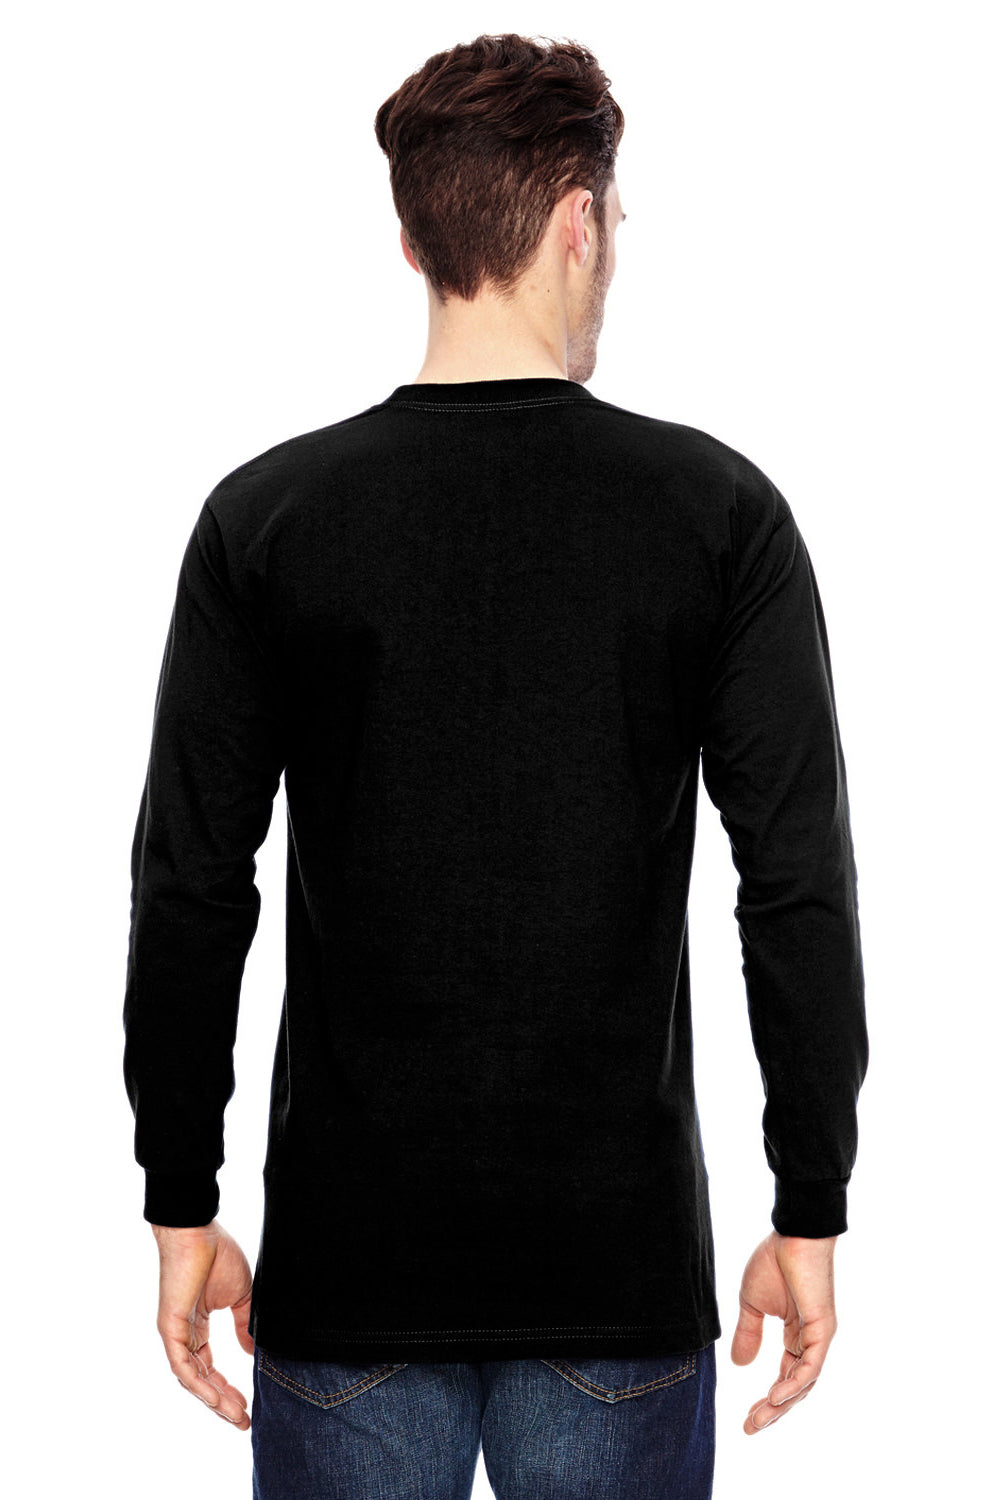 Bayside BA6100 Mens USA Made Long Sleeve Crewneck T-Shirt Black Model Back